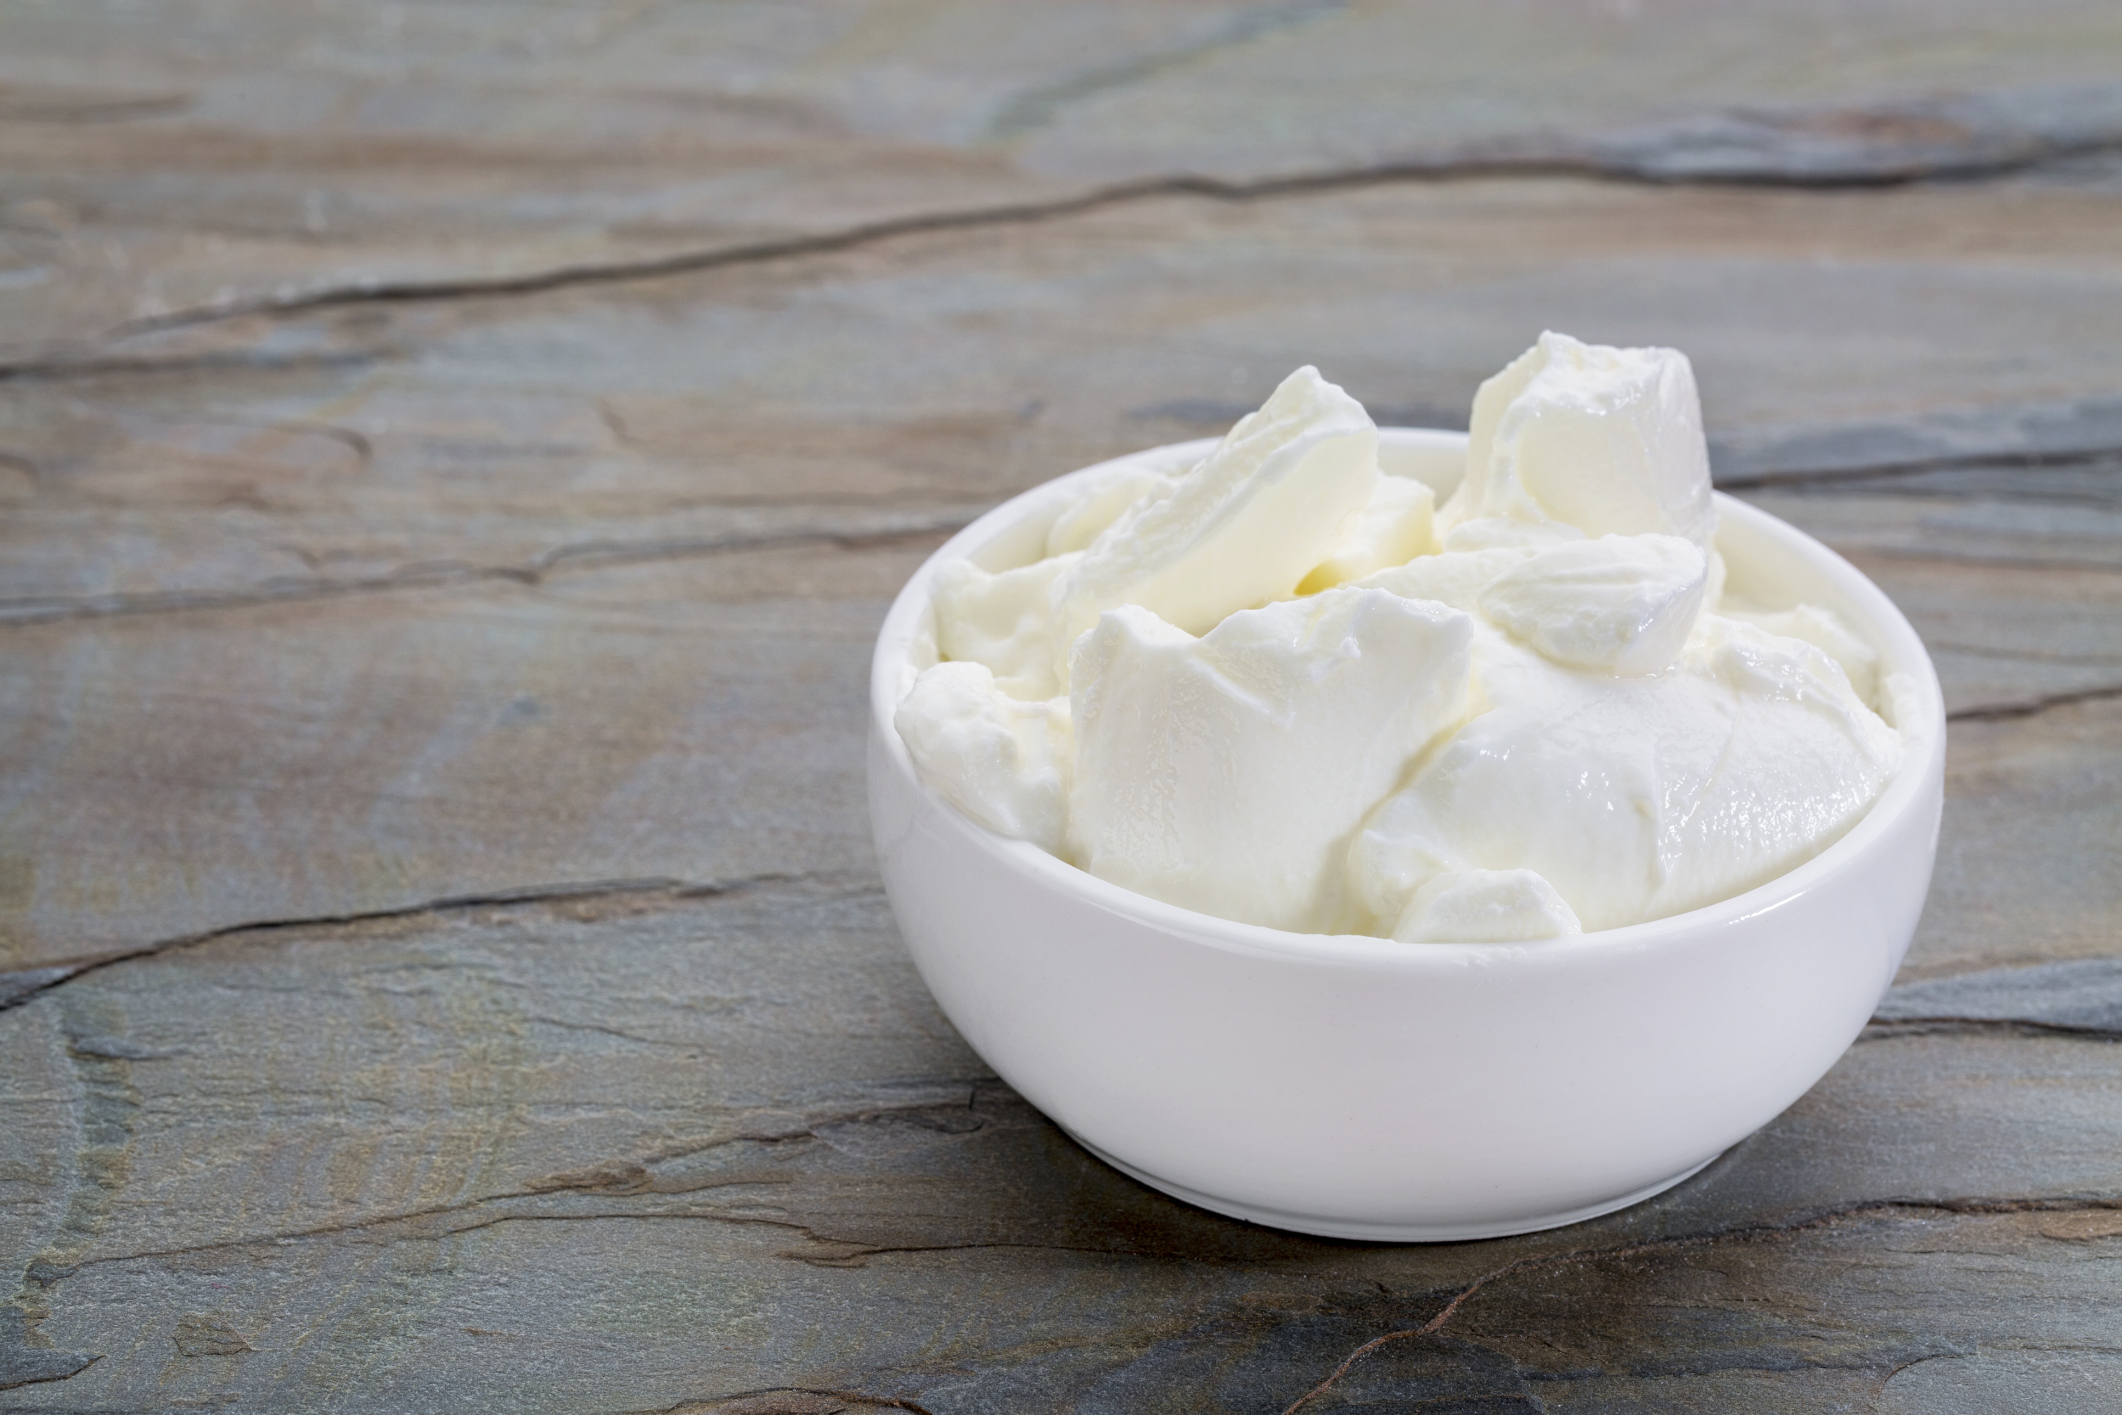 Greek yogurt is a healthy benefit